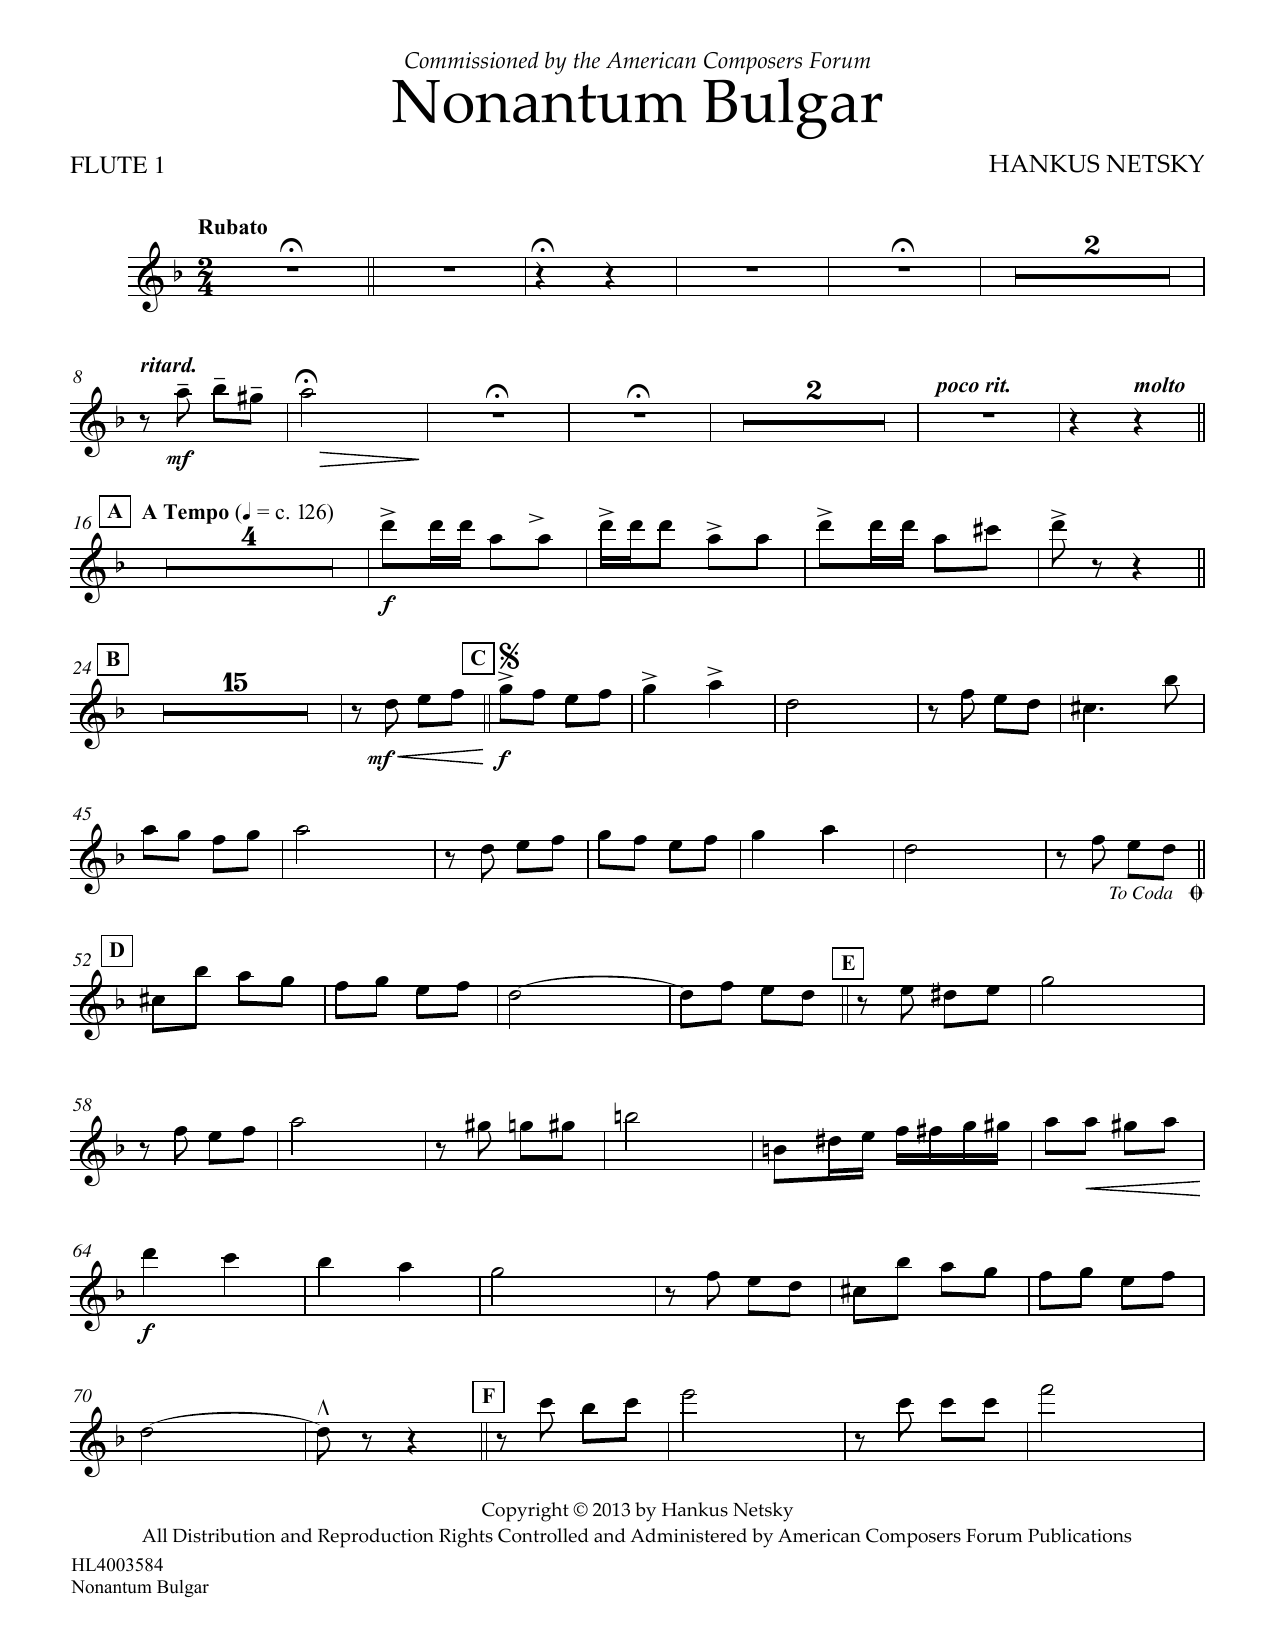 Hankus Netsky Nonantum Bulgar - Flute 1 Sheet Music Notes & Chords for Concert Band - Download or Print PDF